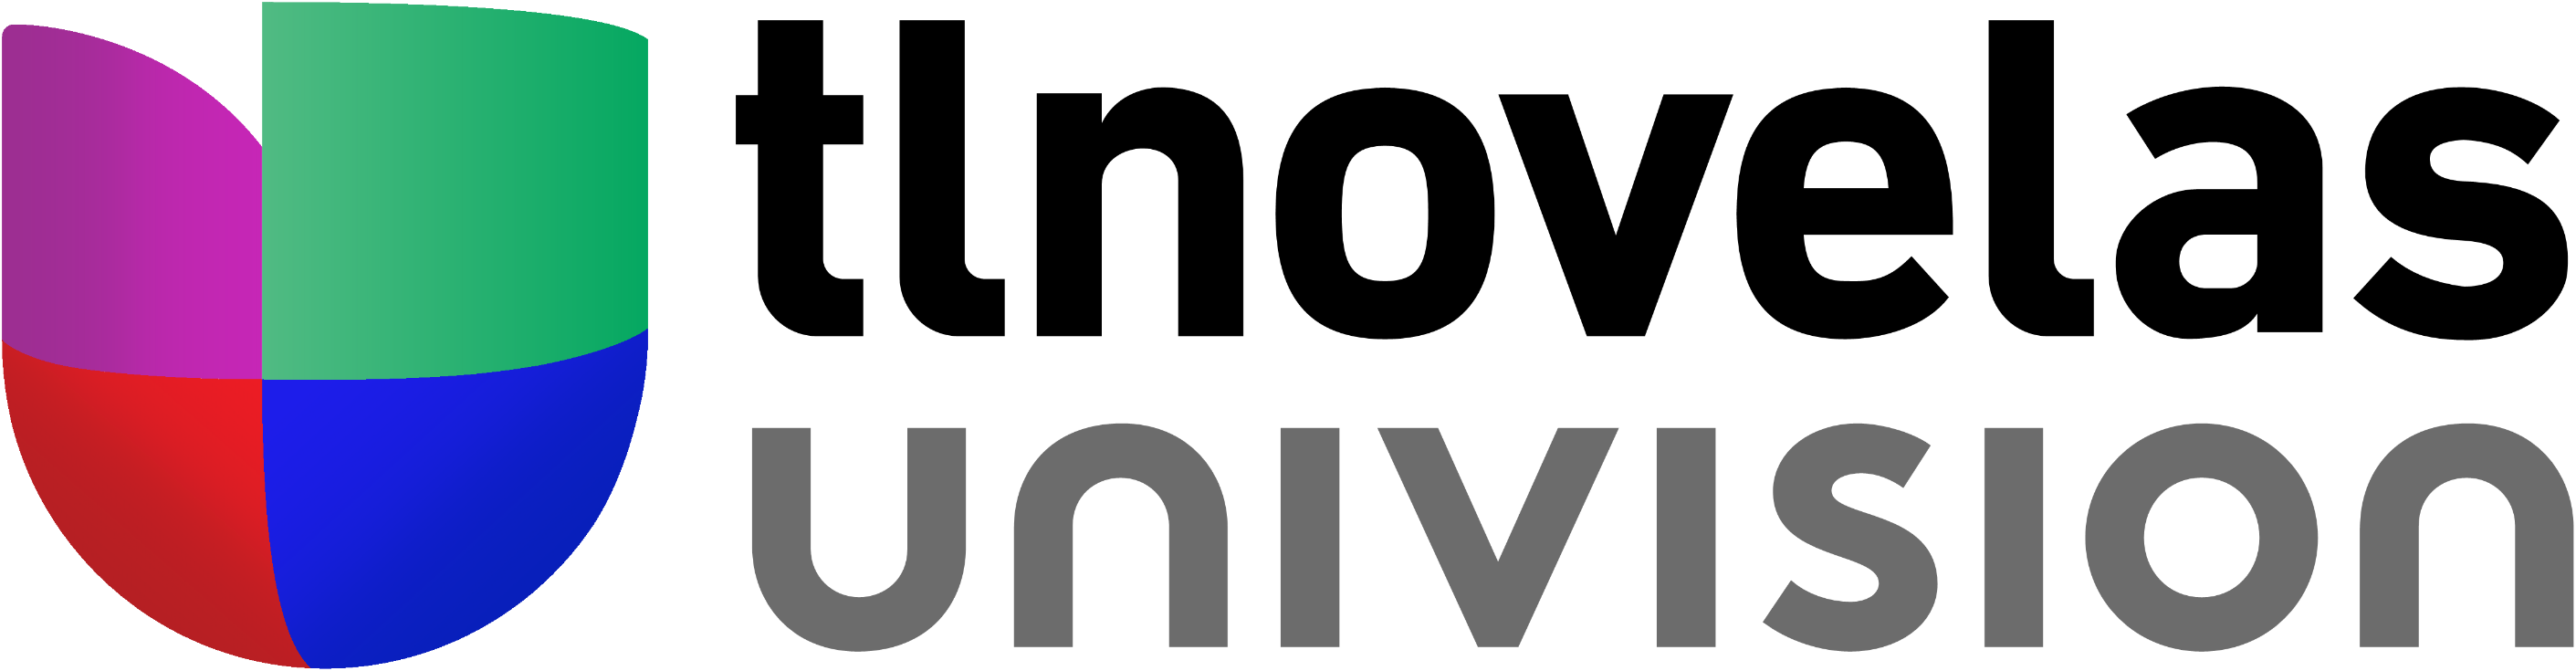 Tlnovelas Univision Logo PNG